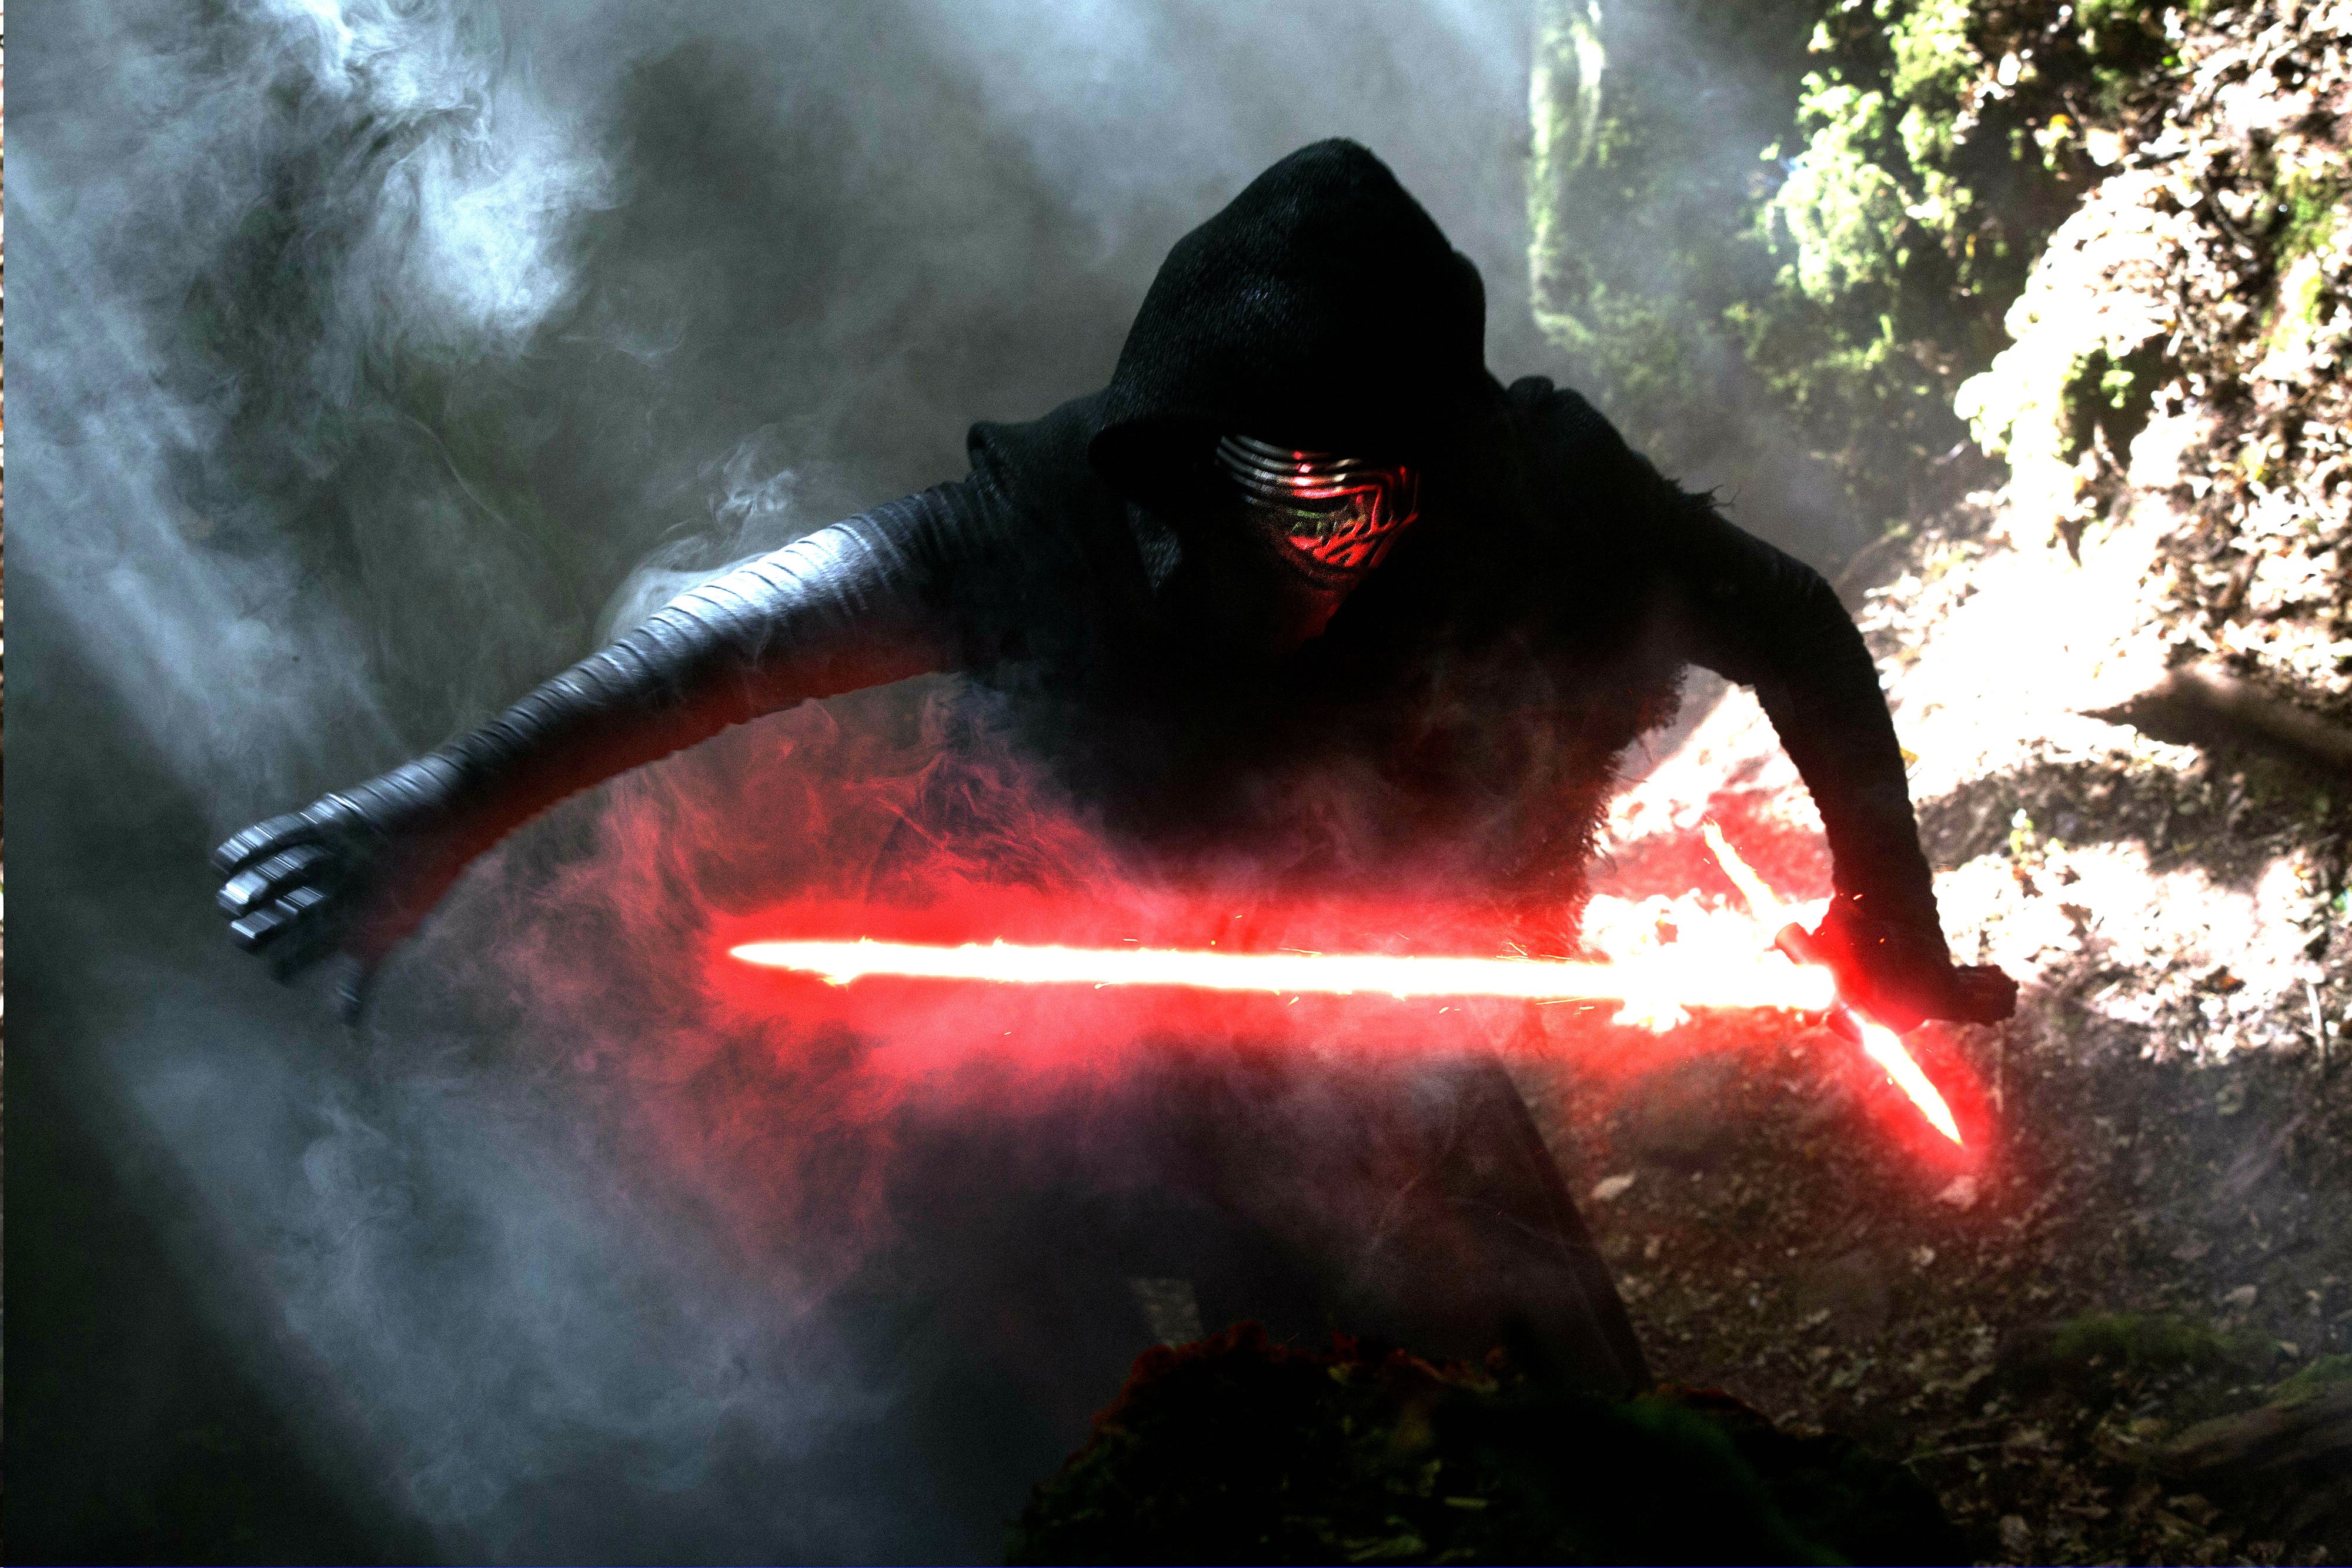 star wars the force awakens full movie hd online